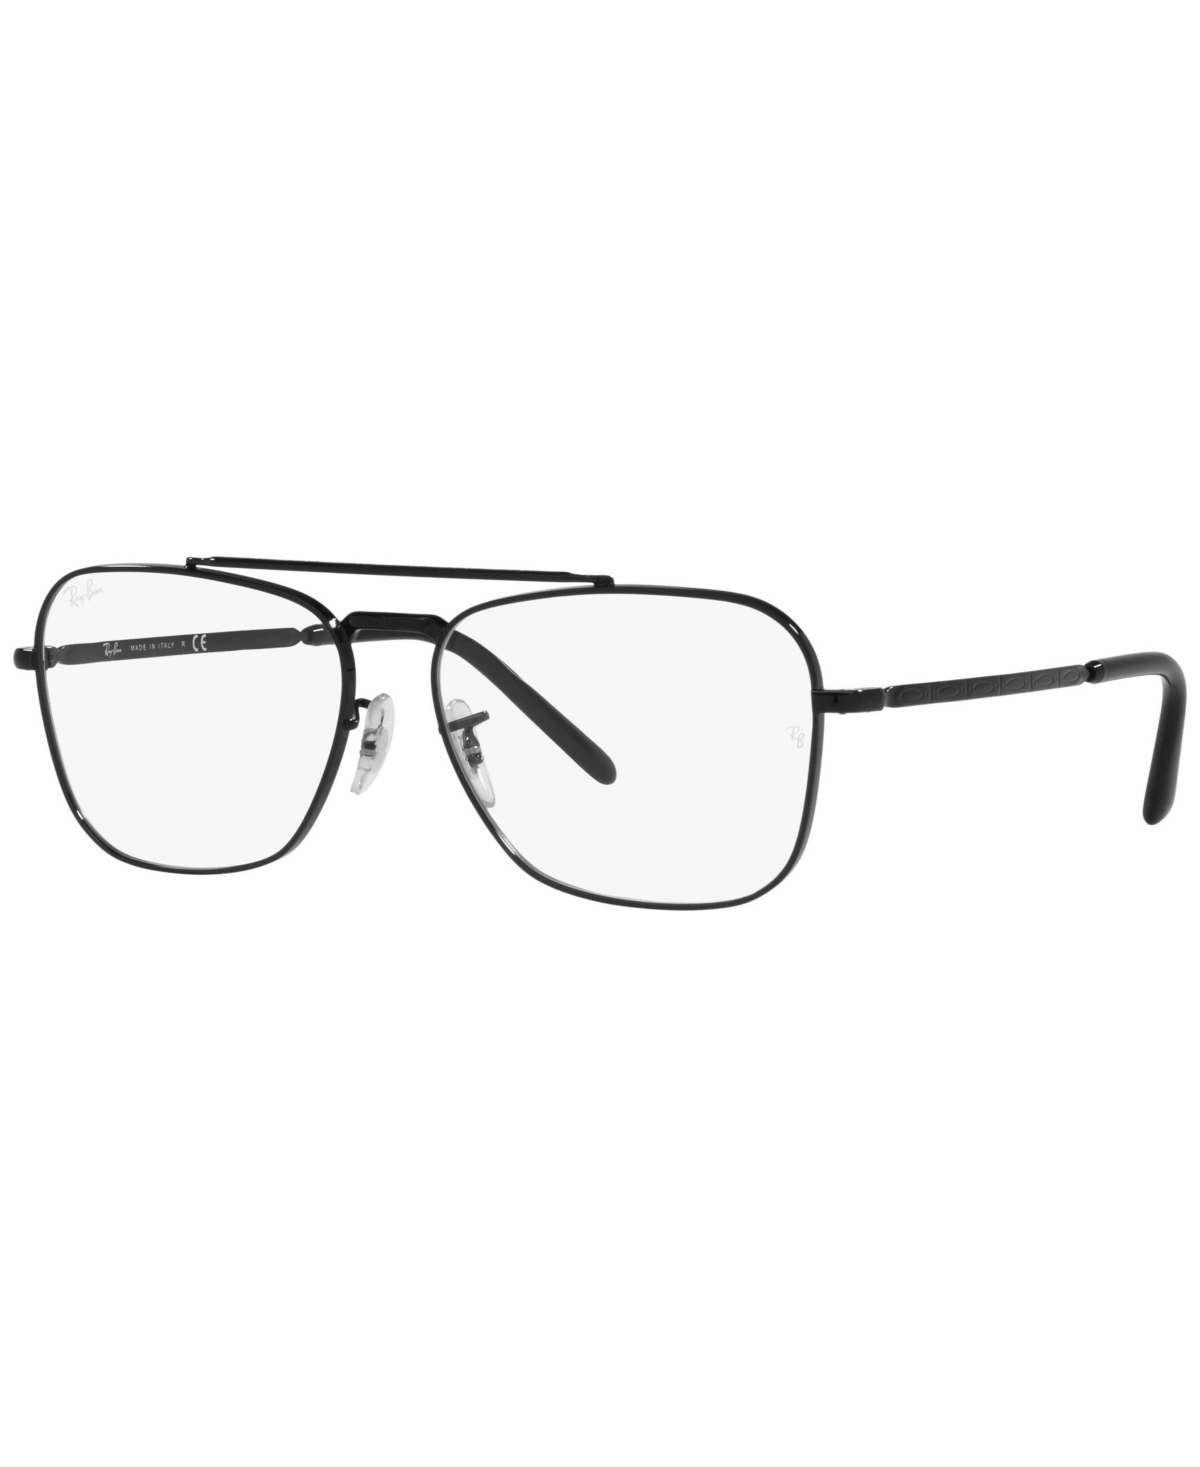 RB3636V New Caravan Unisex Square Eyeglasses - Black